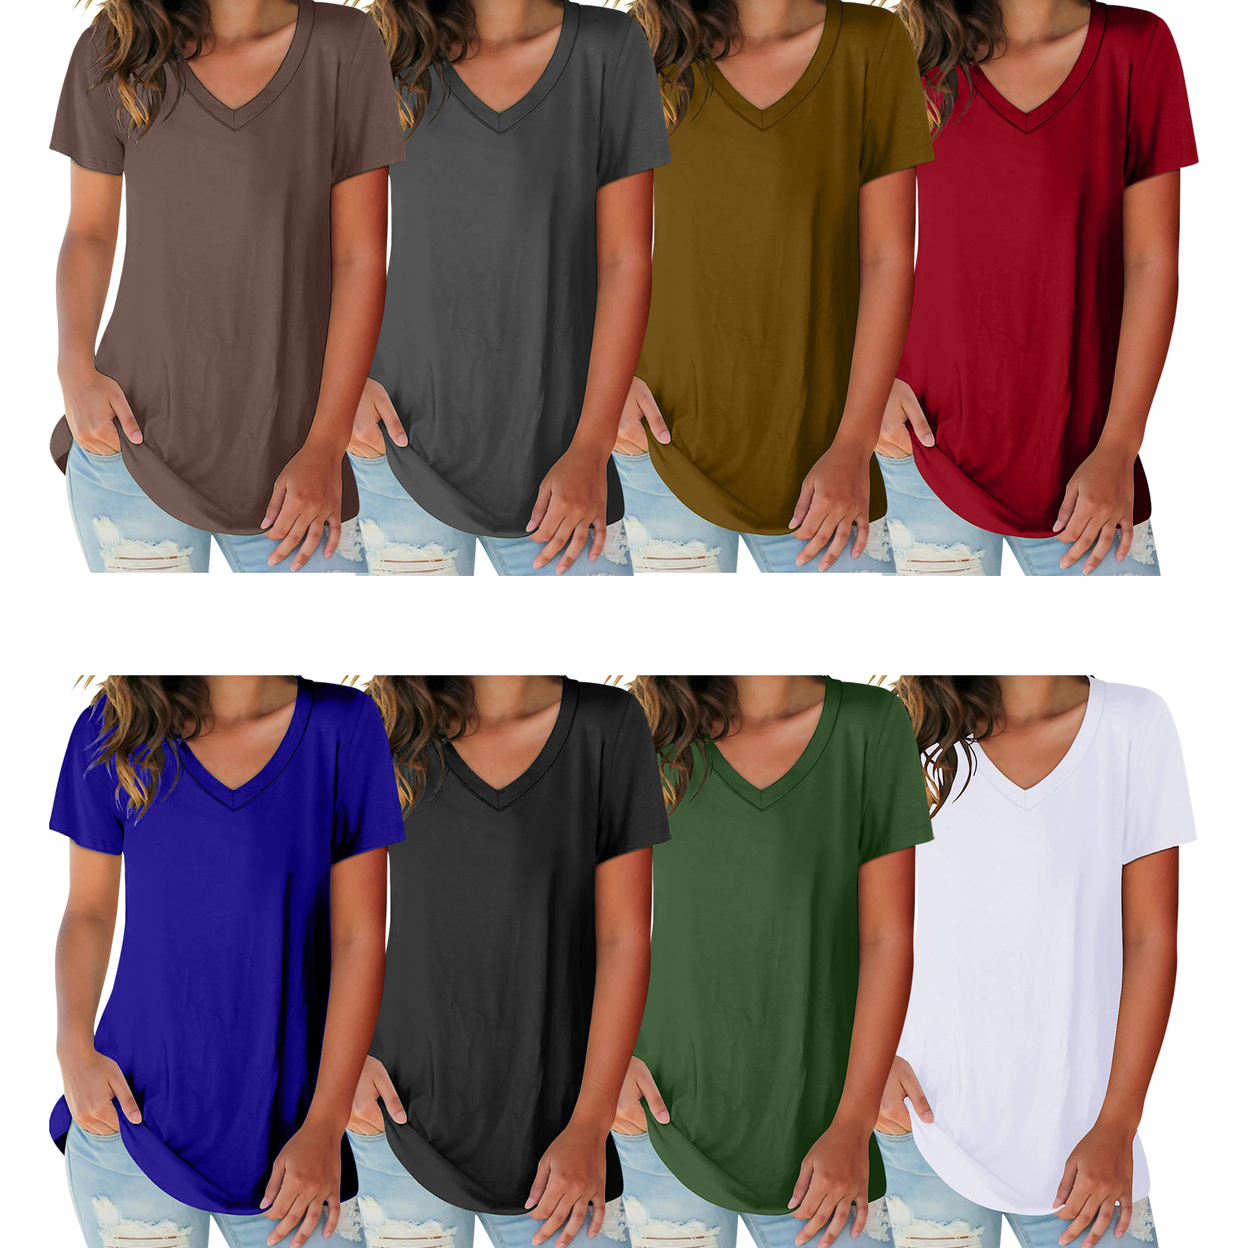 3-Pack: Women's Ultra Soft Smooth Cotton Blend Basic V-Neck Short Sleeve Shirts - Black Grey, Red, X-large